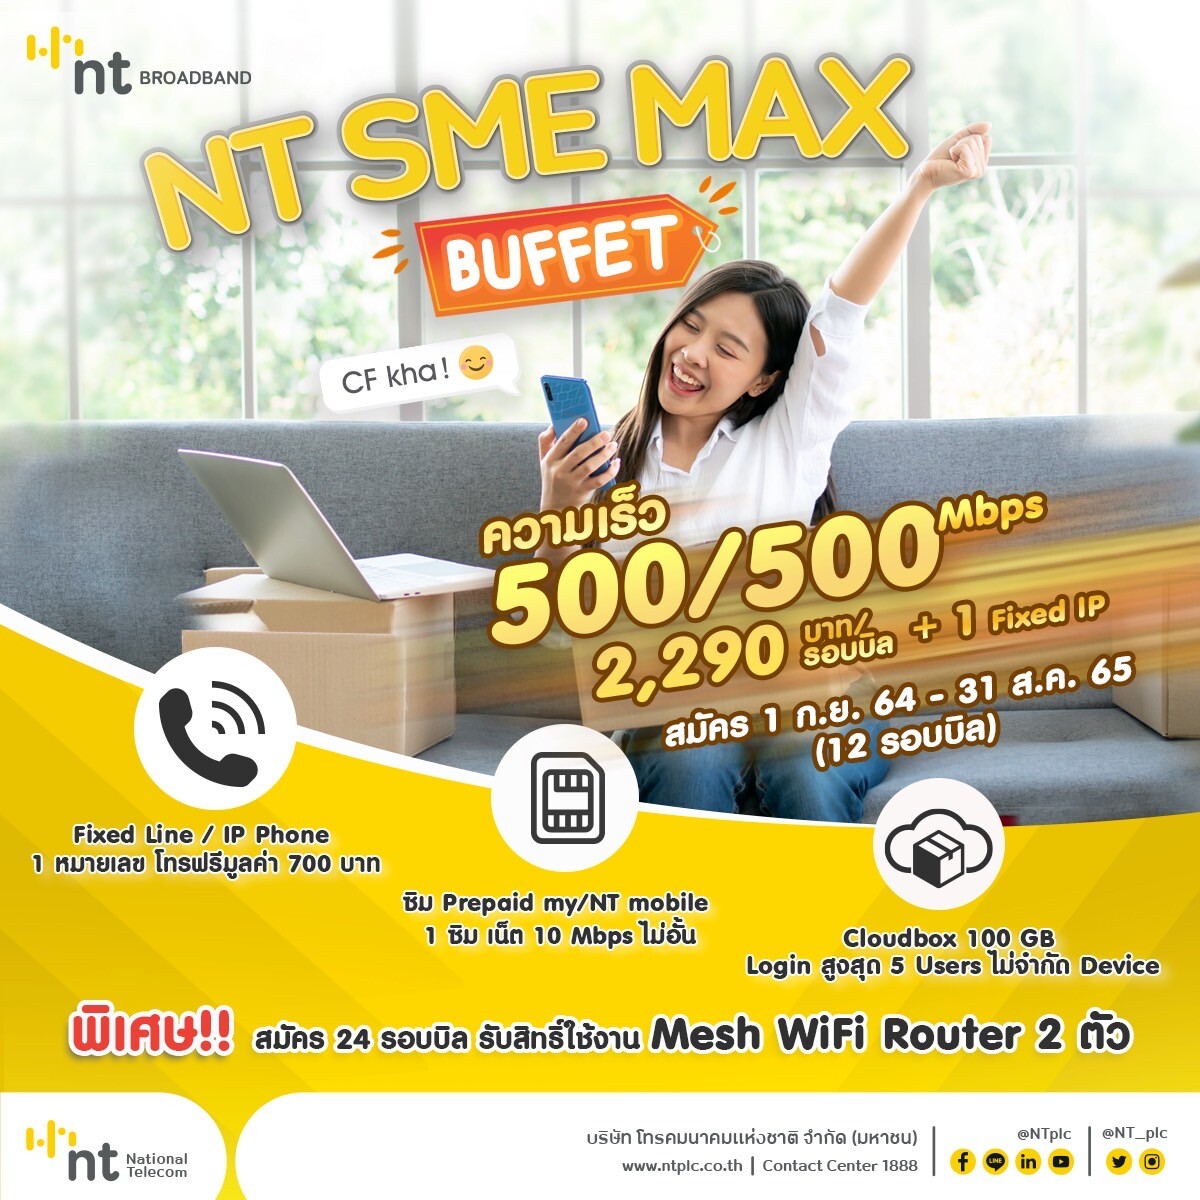 NT SME MAX BUFFET เน็ตเต็มแม็กซ์ คุ้มค่าทุกสปีด เพื่อคนทำธุรกิจ